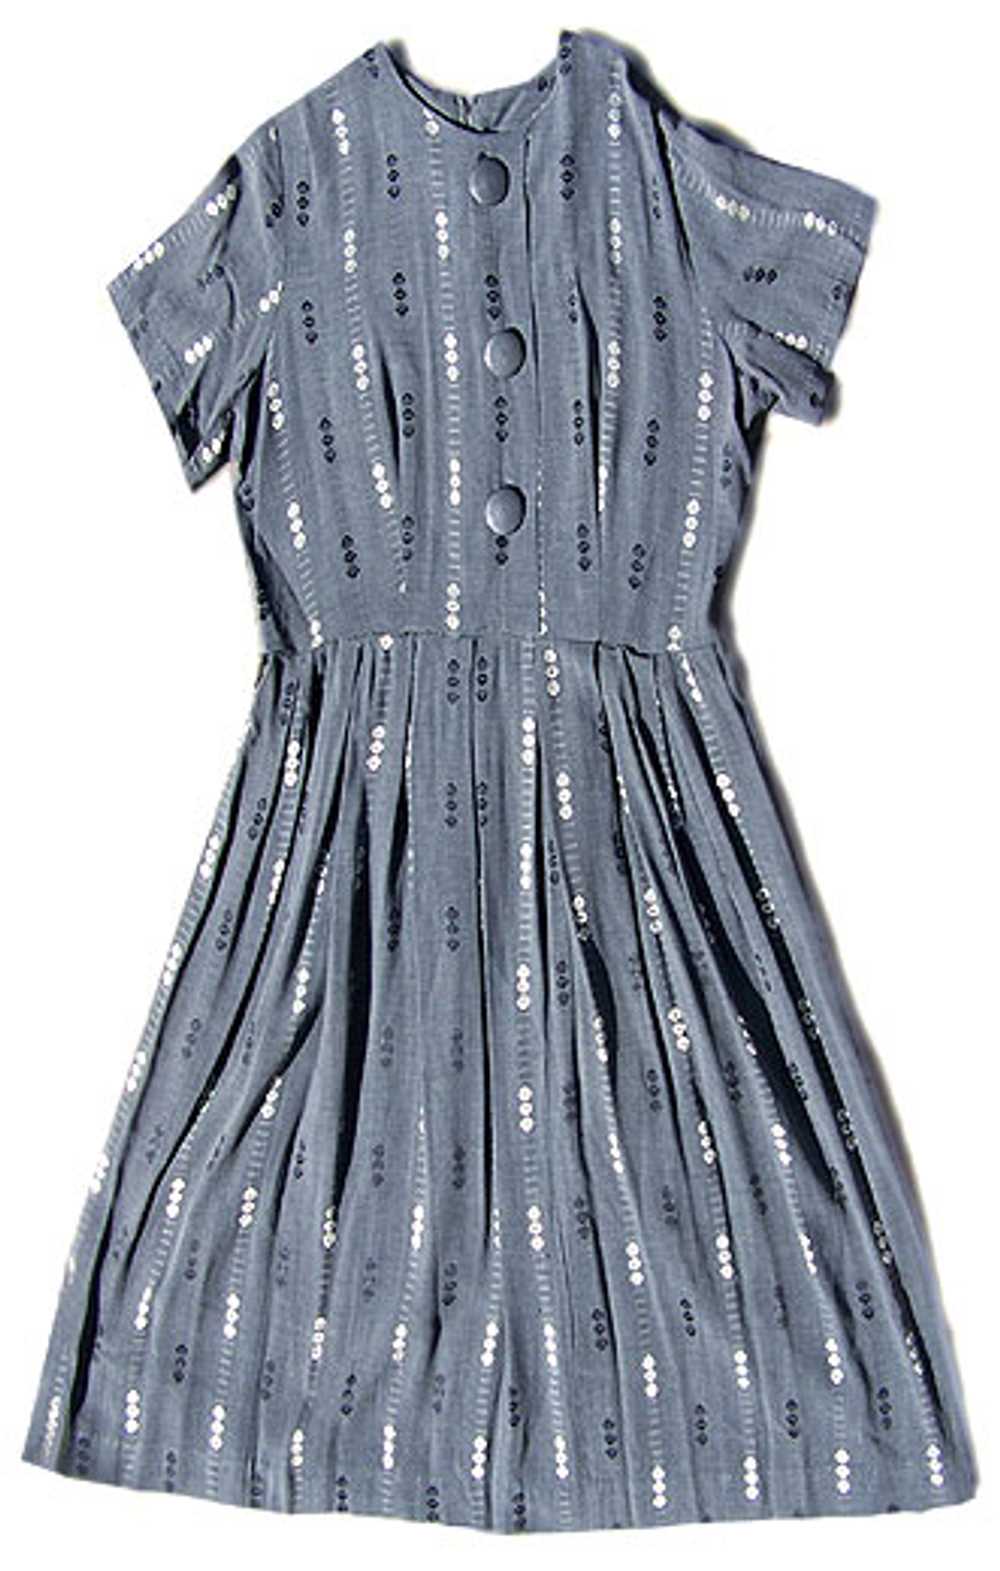 Grey shirtwaist dress 1X - image 2